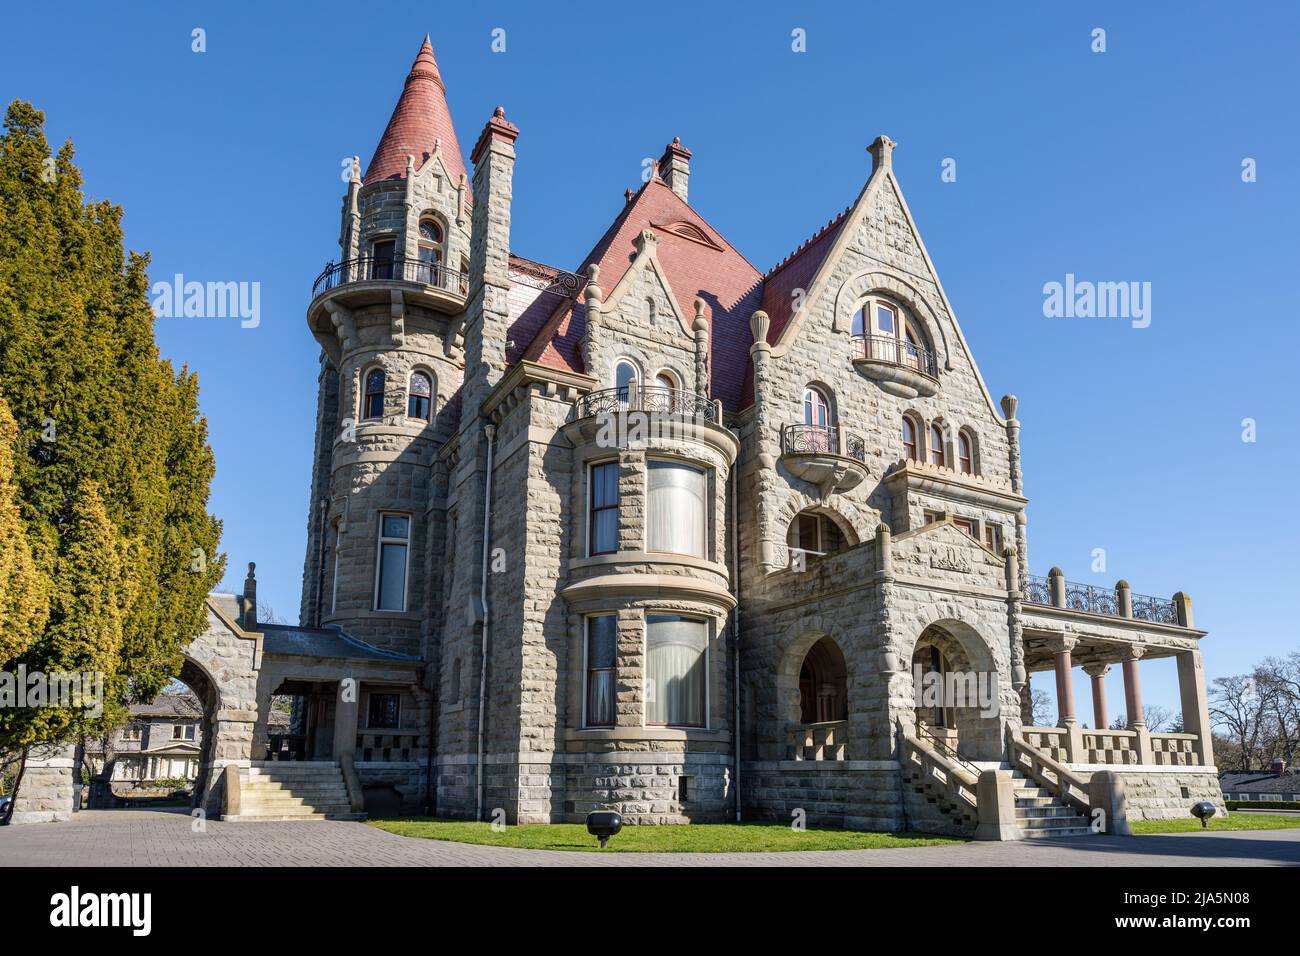 Victoria, C.-B., Canada - 14 avril 2021 : vue de face du château de Craigdarroch. Lieu historique national du Canada Craigdarroch. Banque D'Images